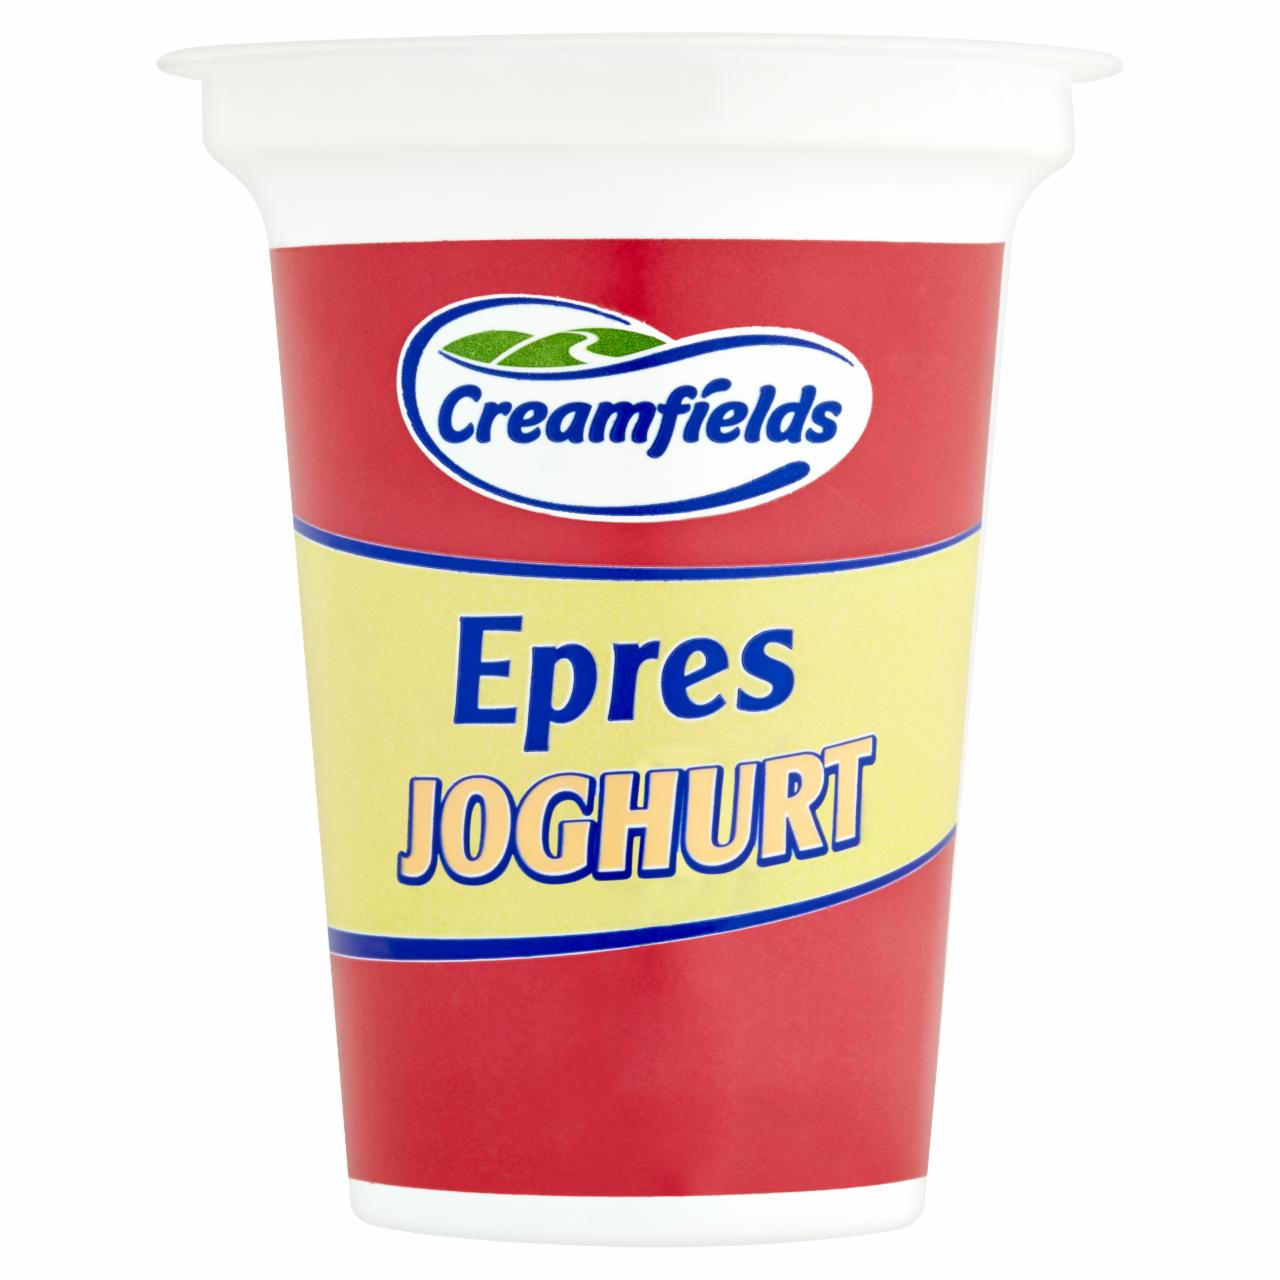 Képek - Creamfields epres joghurt 140 g